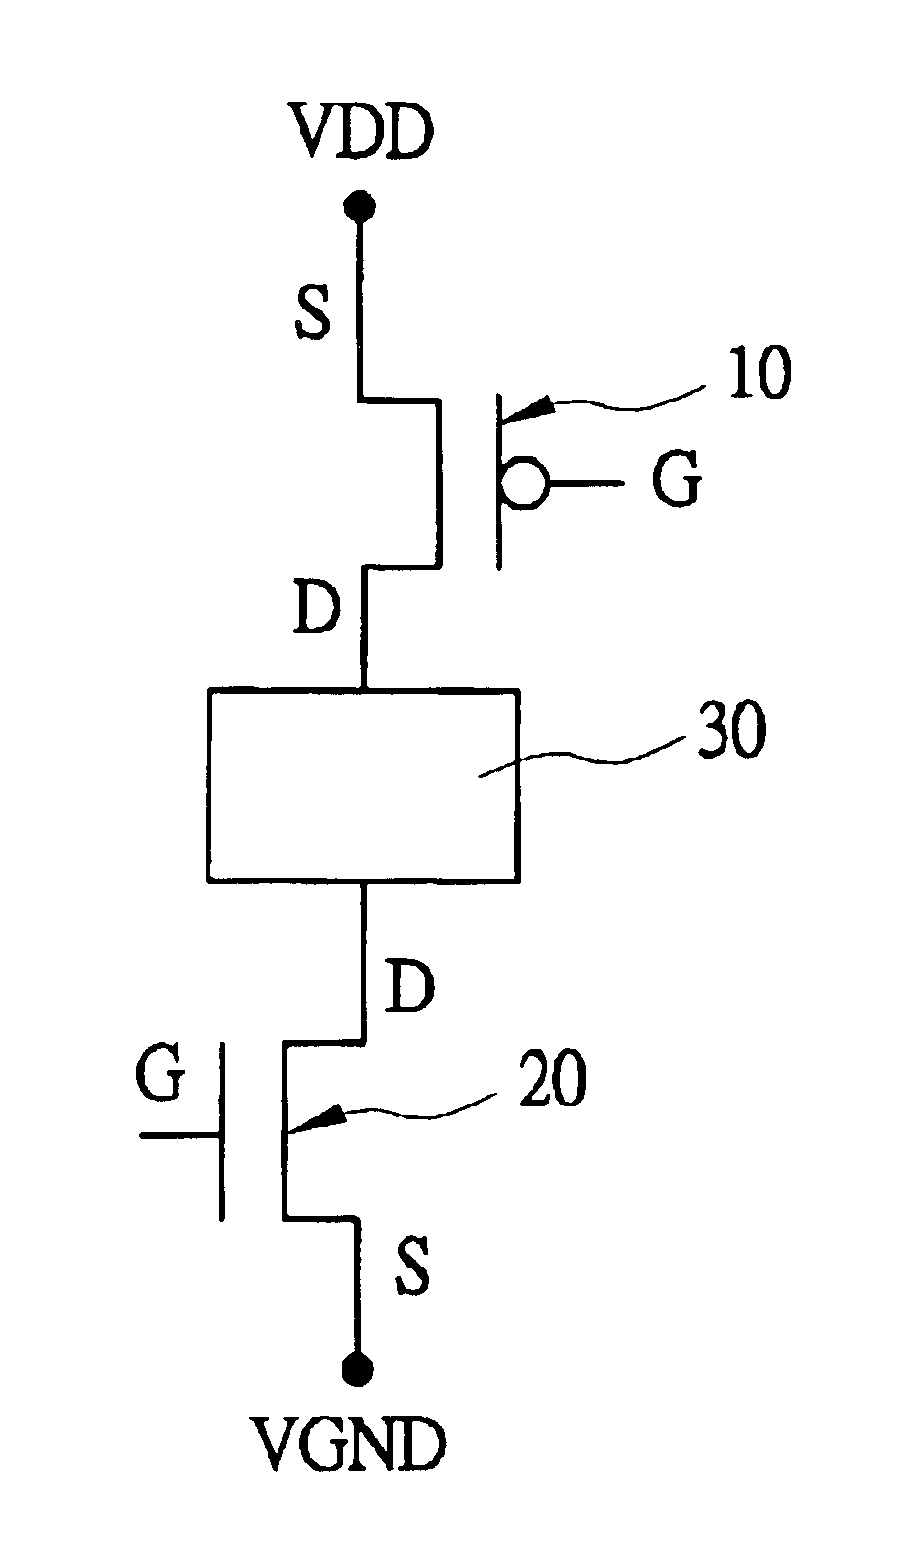 Circuit apparatus operable under high voltage